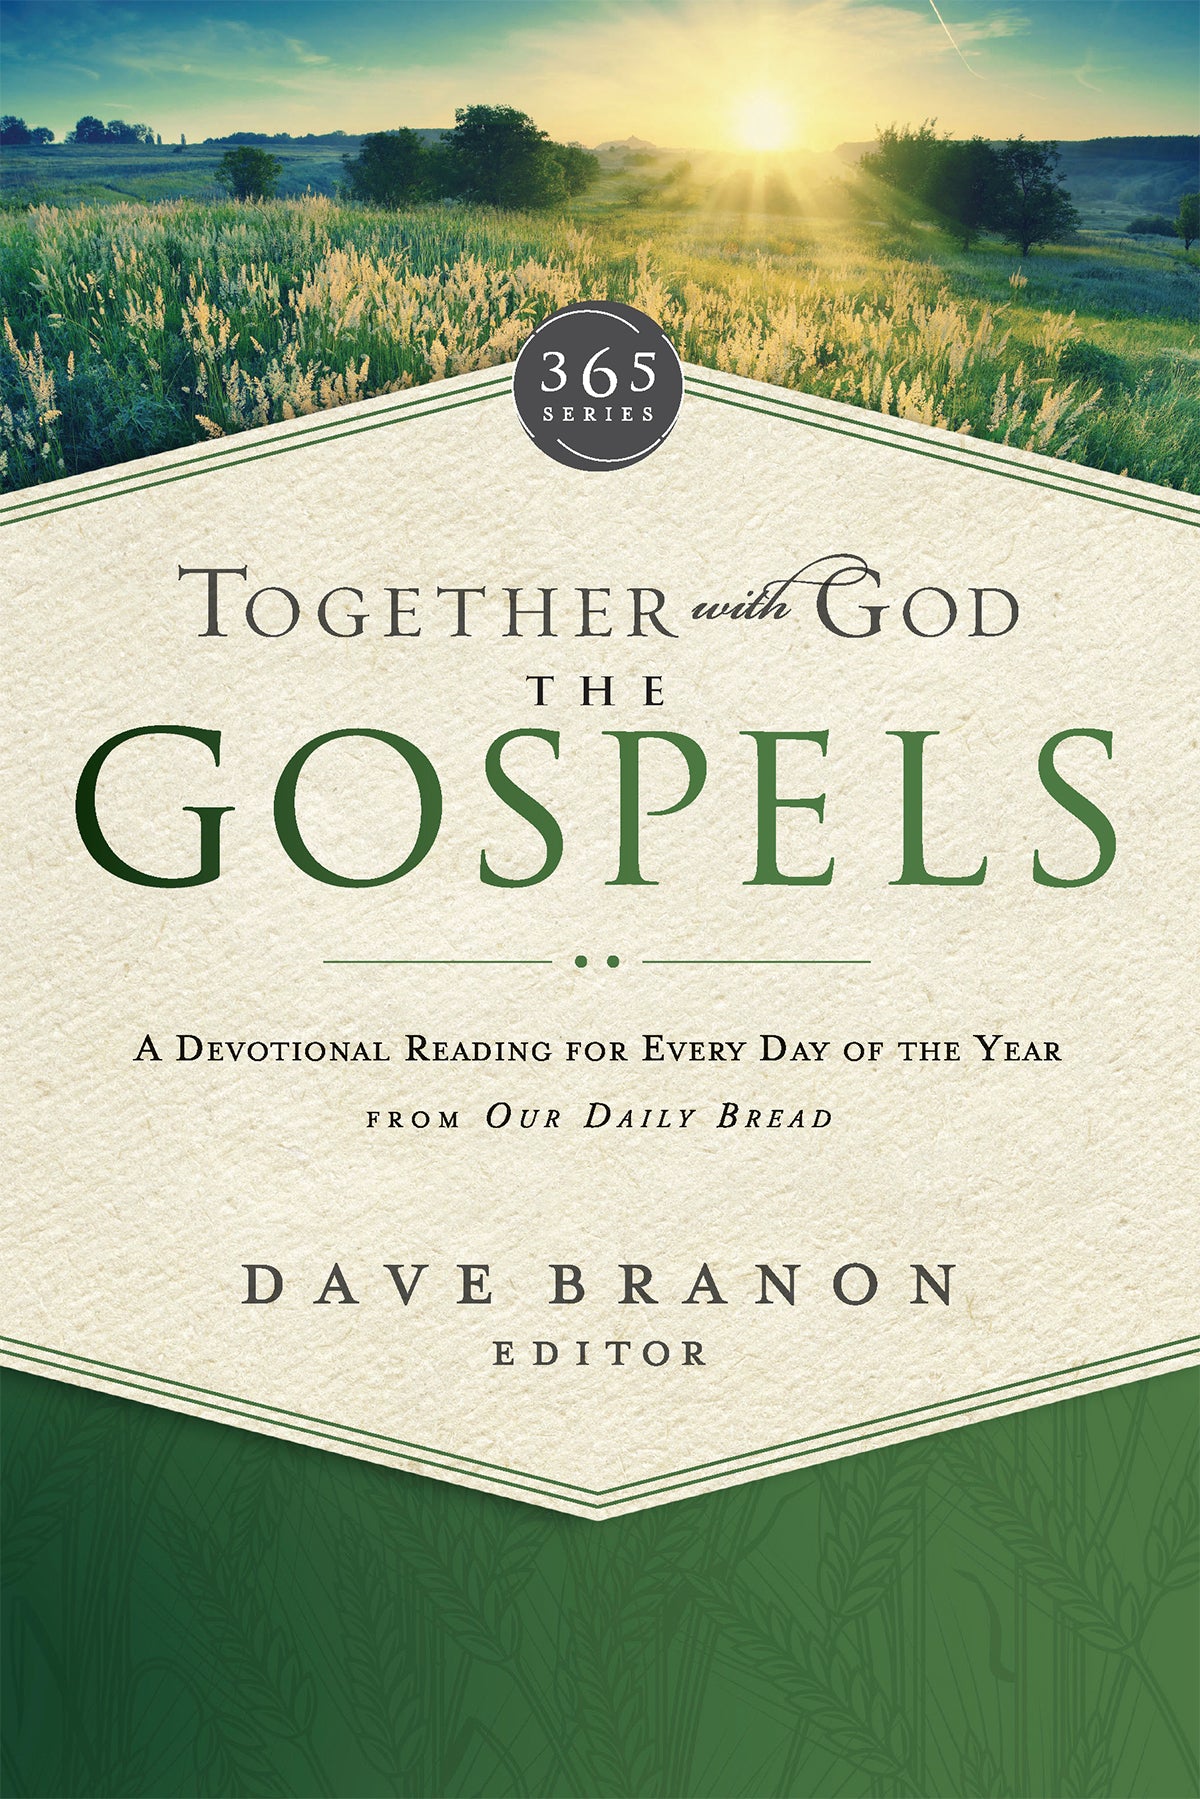 Together with God: The Gospels [E-book]